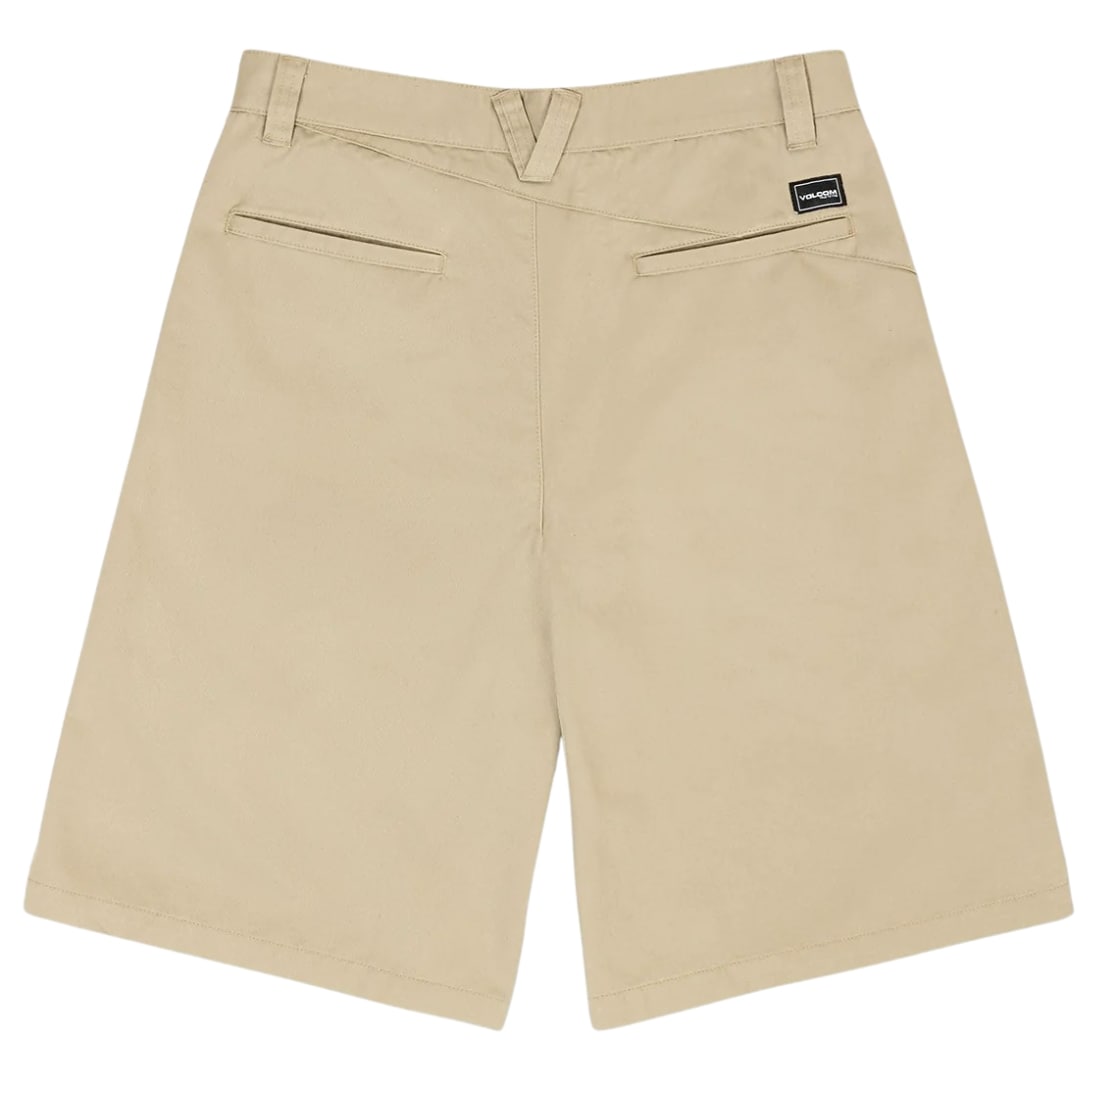 Volcom Loose Truck Shorts - Khaki - Mens Chino Shorts by Volcom